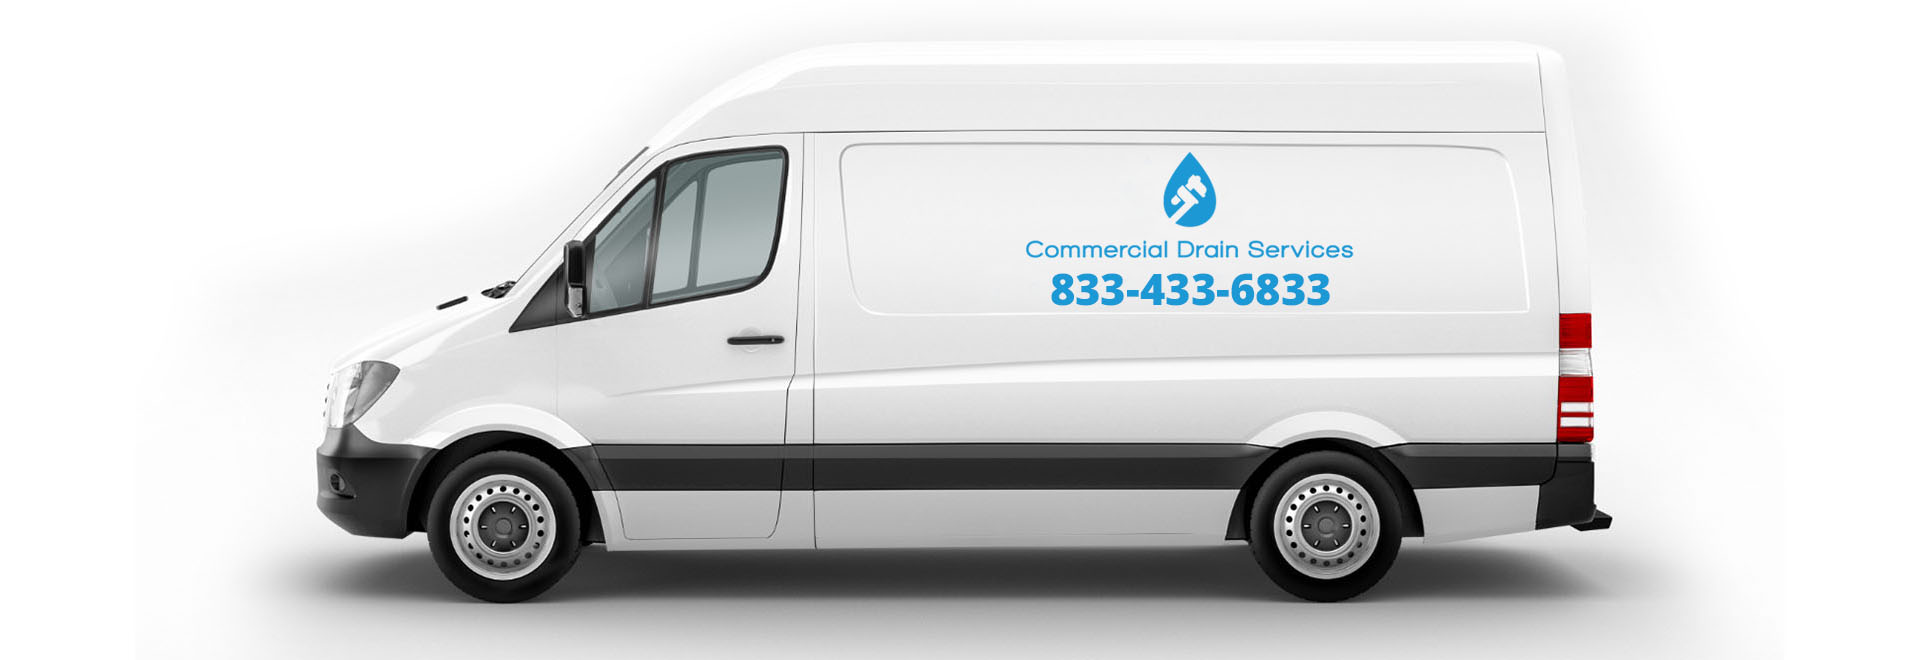 Commercial Drain Services Work Van